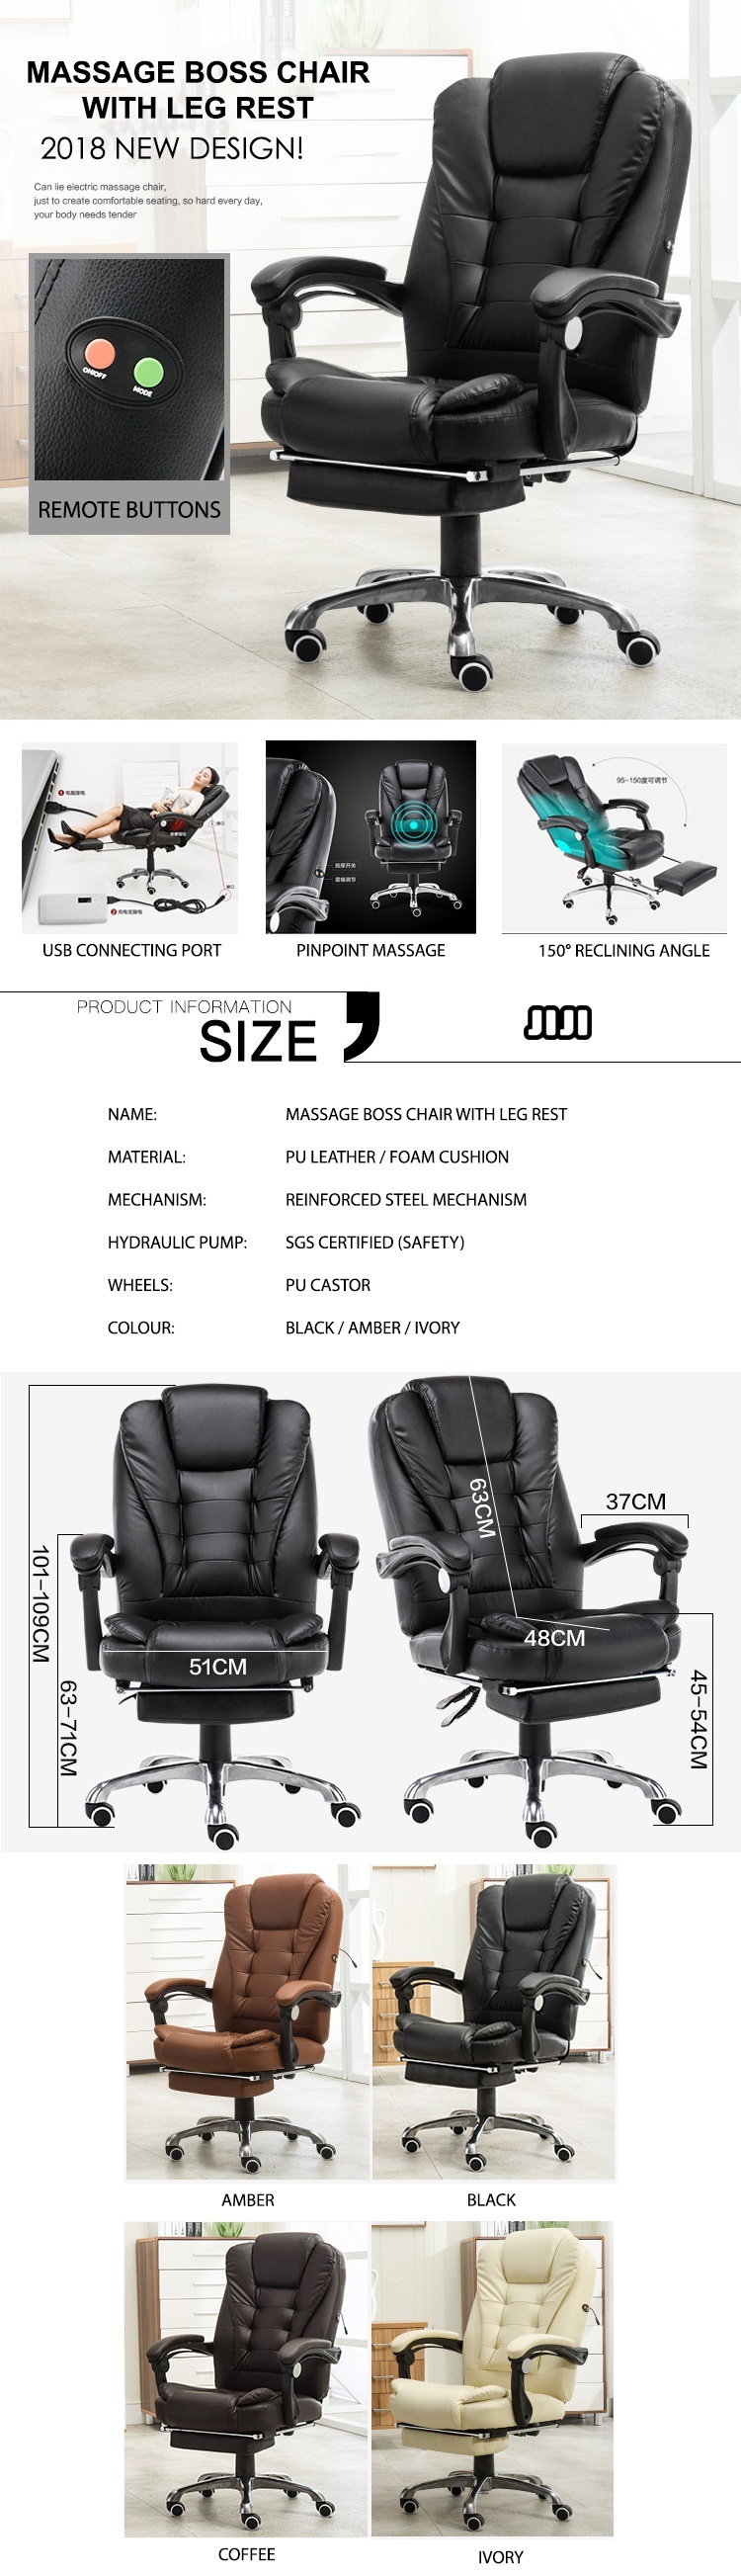 Office Massage Boss Chair With Leg Rest Free Installation 1